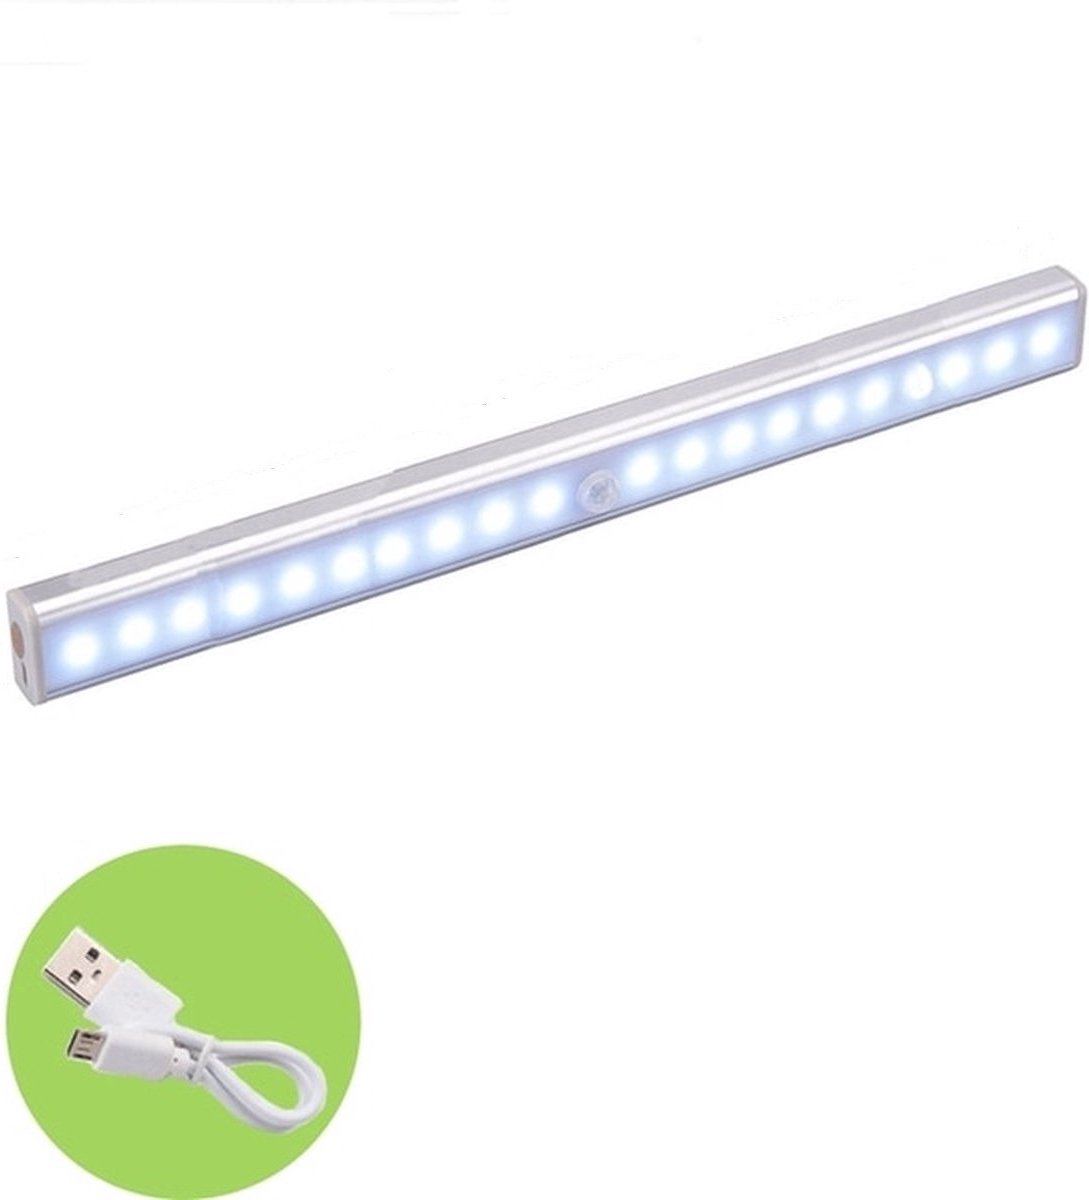 LED Lamp Met Beweging Sensor 20CM - Inclusief Type C Kabel - Nacht Lamp - Warm White - USB Oplaadbaar - Light Motion Sensor - ’merkloos’